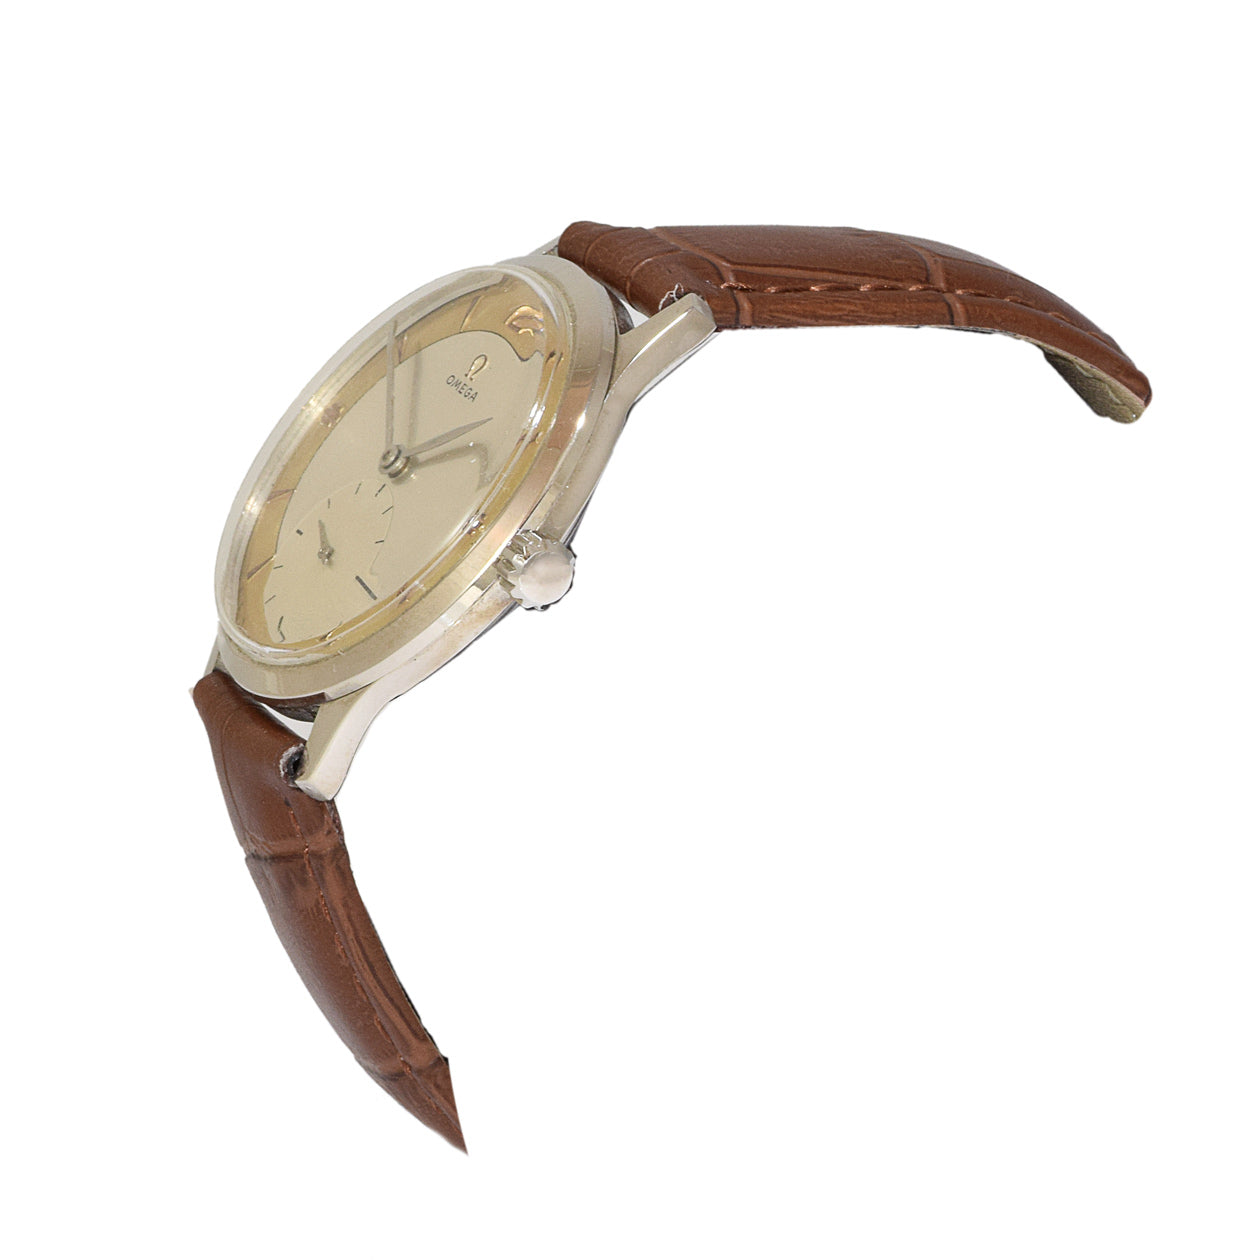 Vintage Omega circa 1950's watch